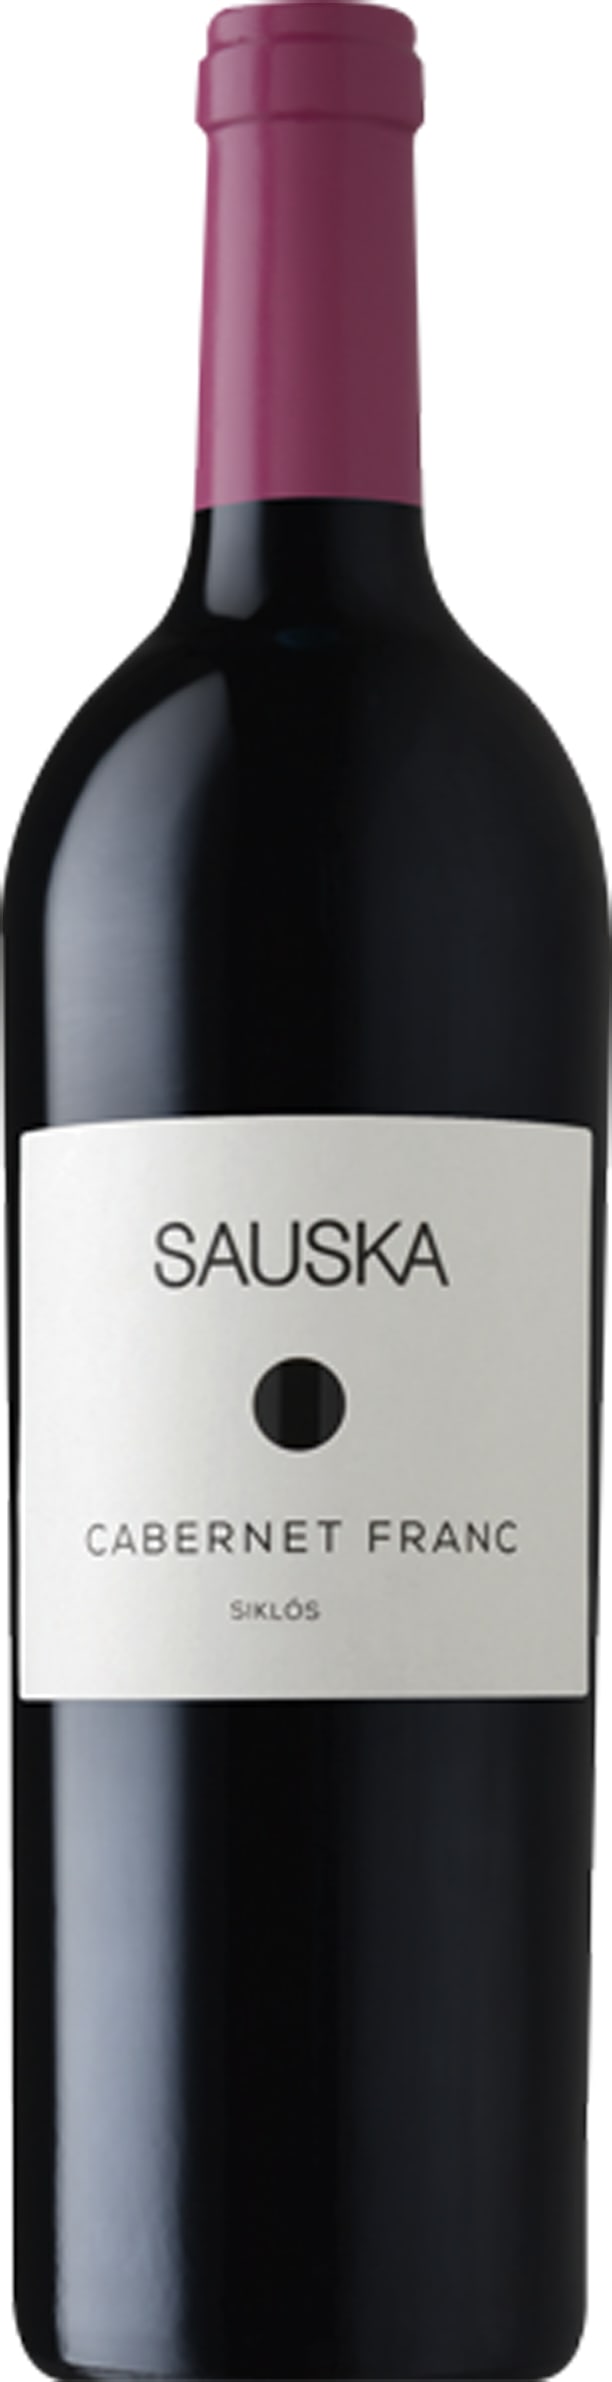 Sauska Cabernet Franc Siklos 2017 75cl - Buy Sauska Wines from GREAT WINES DIRECT wine shop